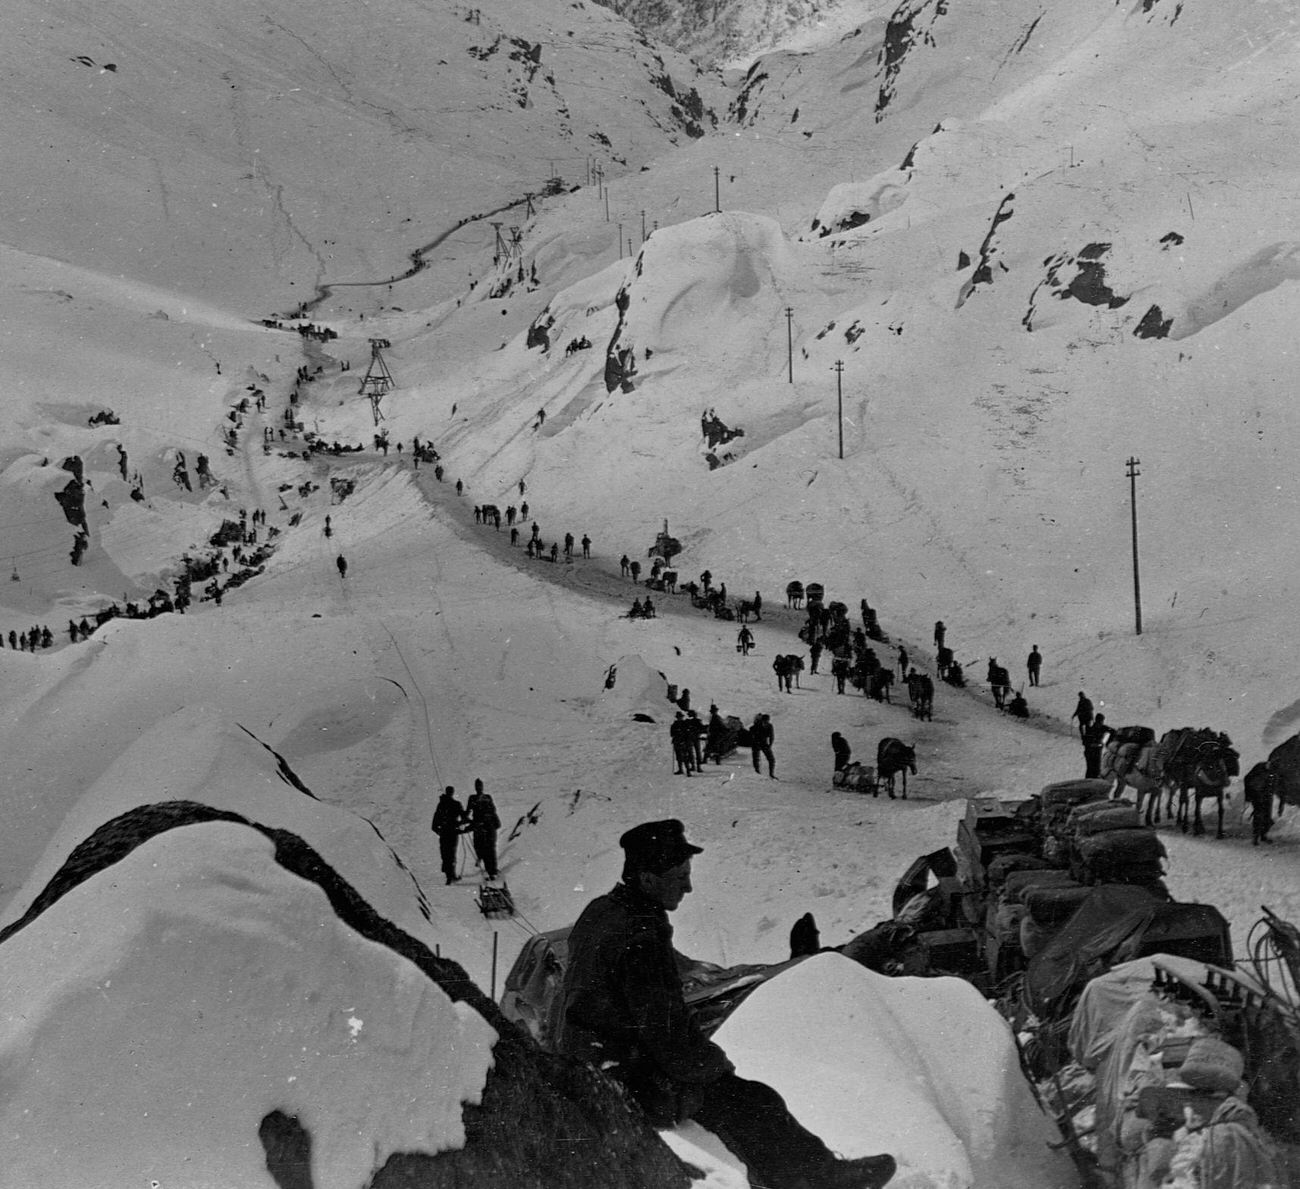 Prospectors on the Dyea Trail heading for the Yukon gold fields, Alaska, 1898.